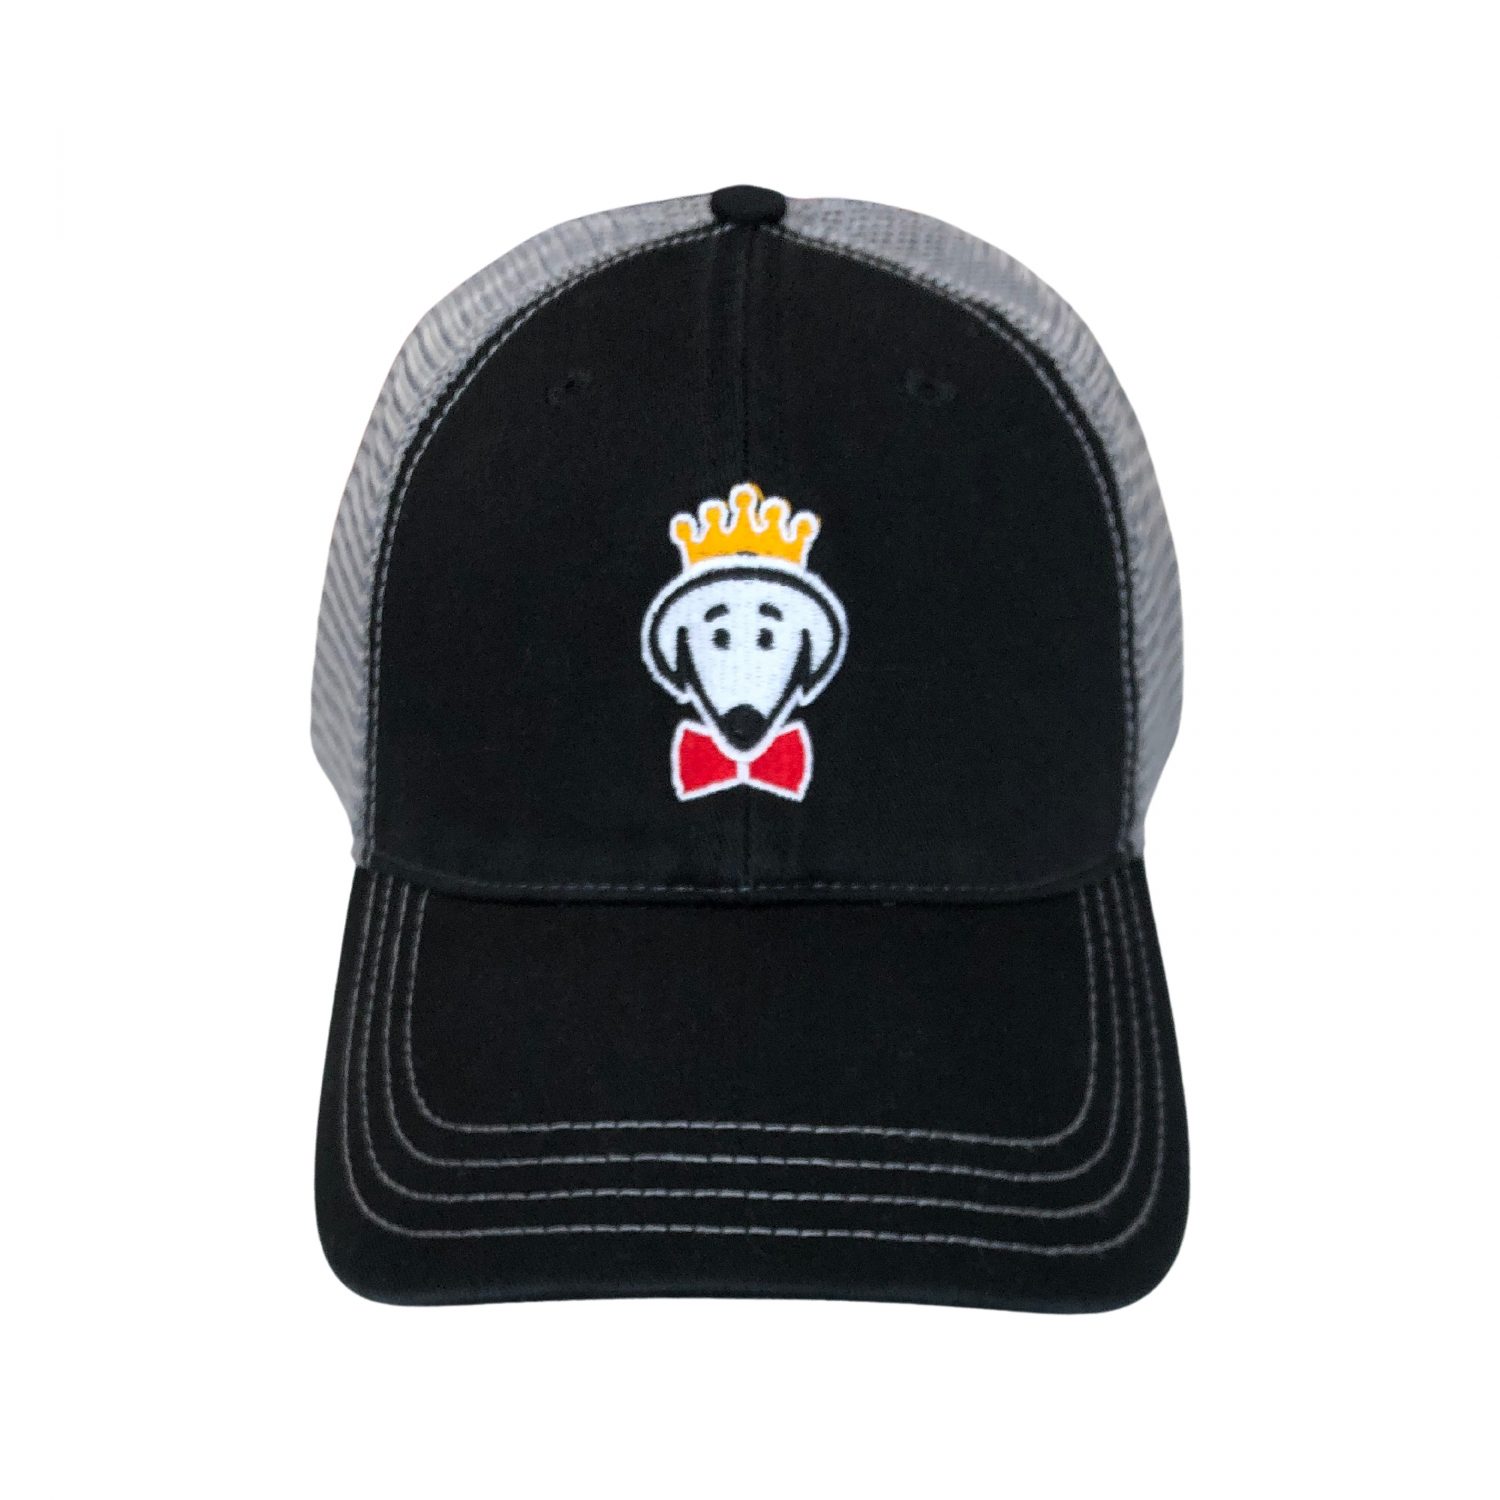 Beau Tyler crown baseball hat black front gray back